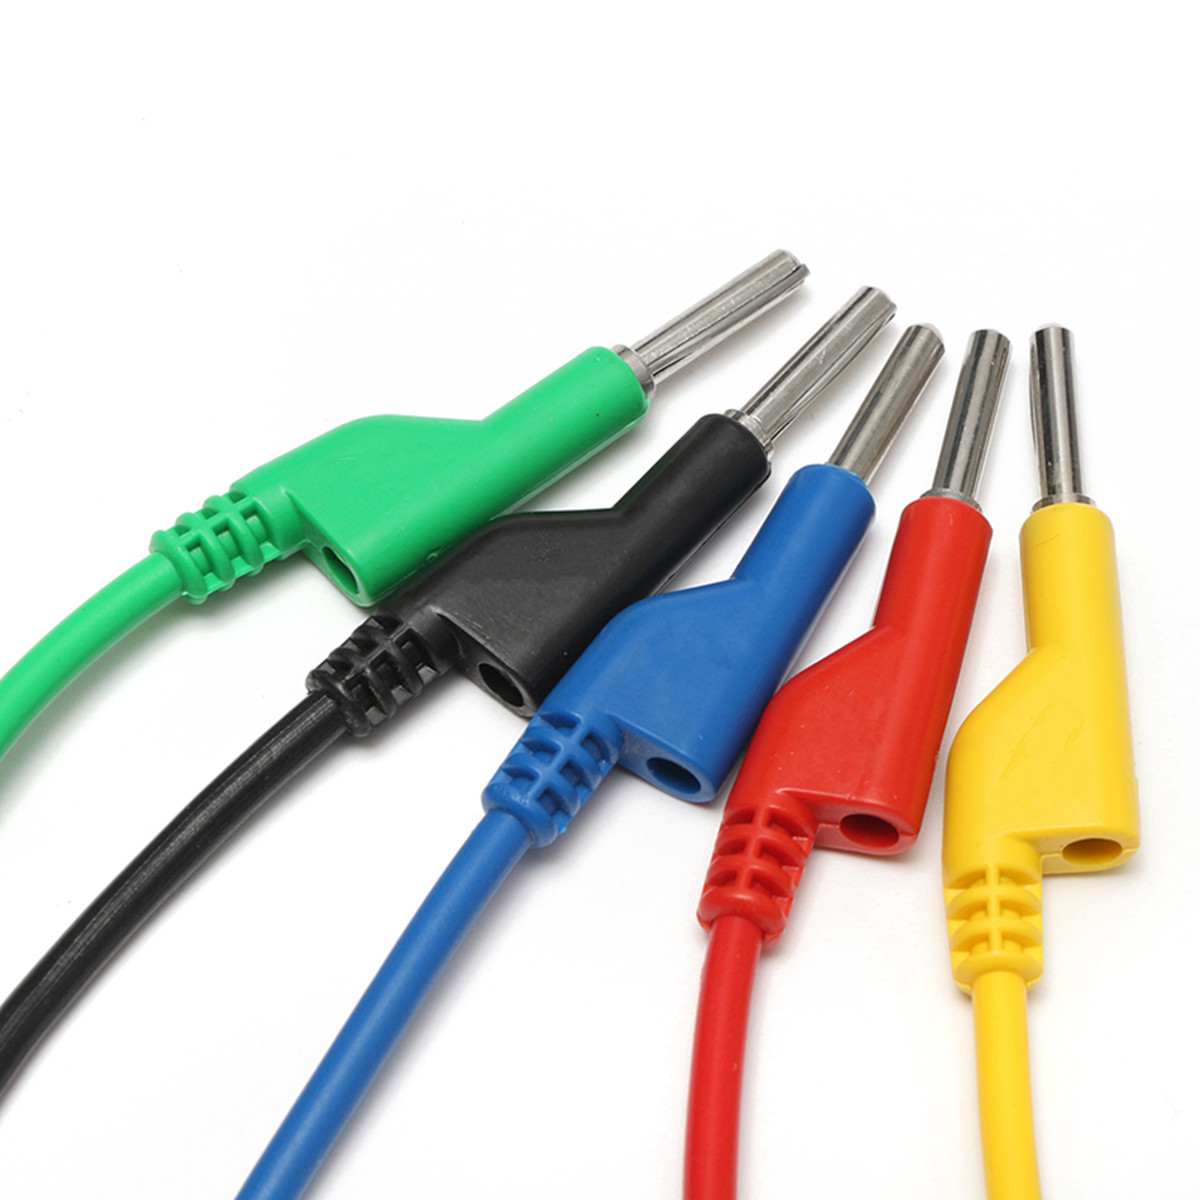 DANIU-5Pcs-5-Colors-Silicone-Banana-to-Banana-Plugs-Test-Probe-Leads-Cable-1157614-3